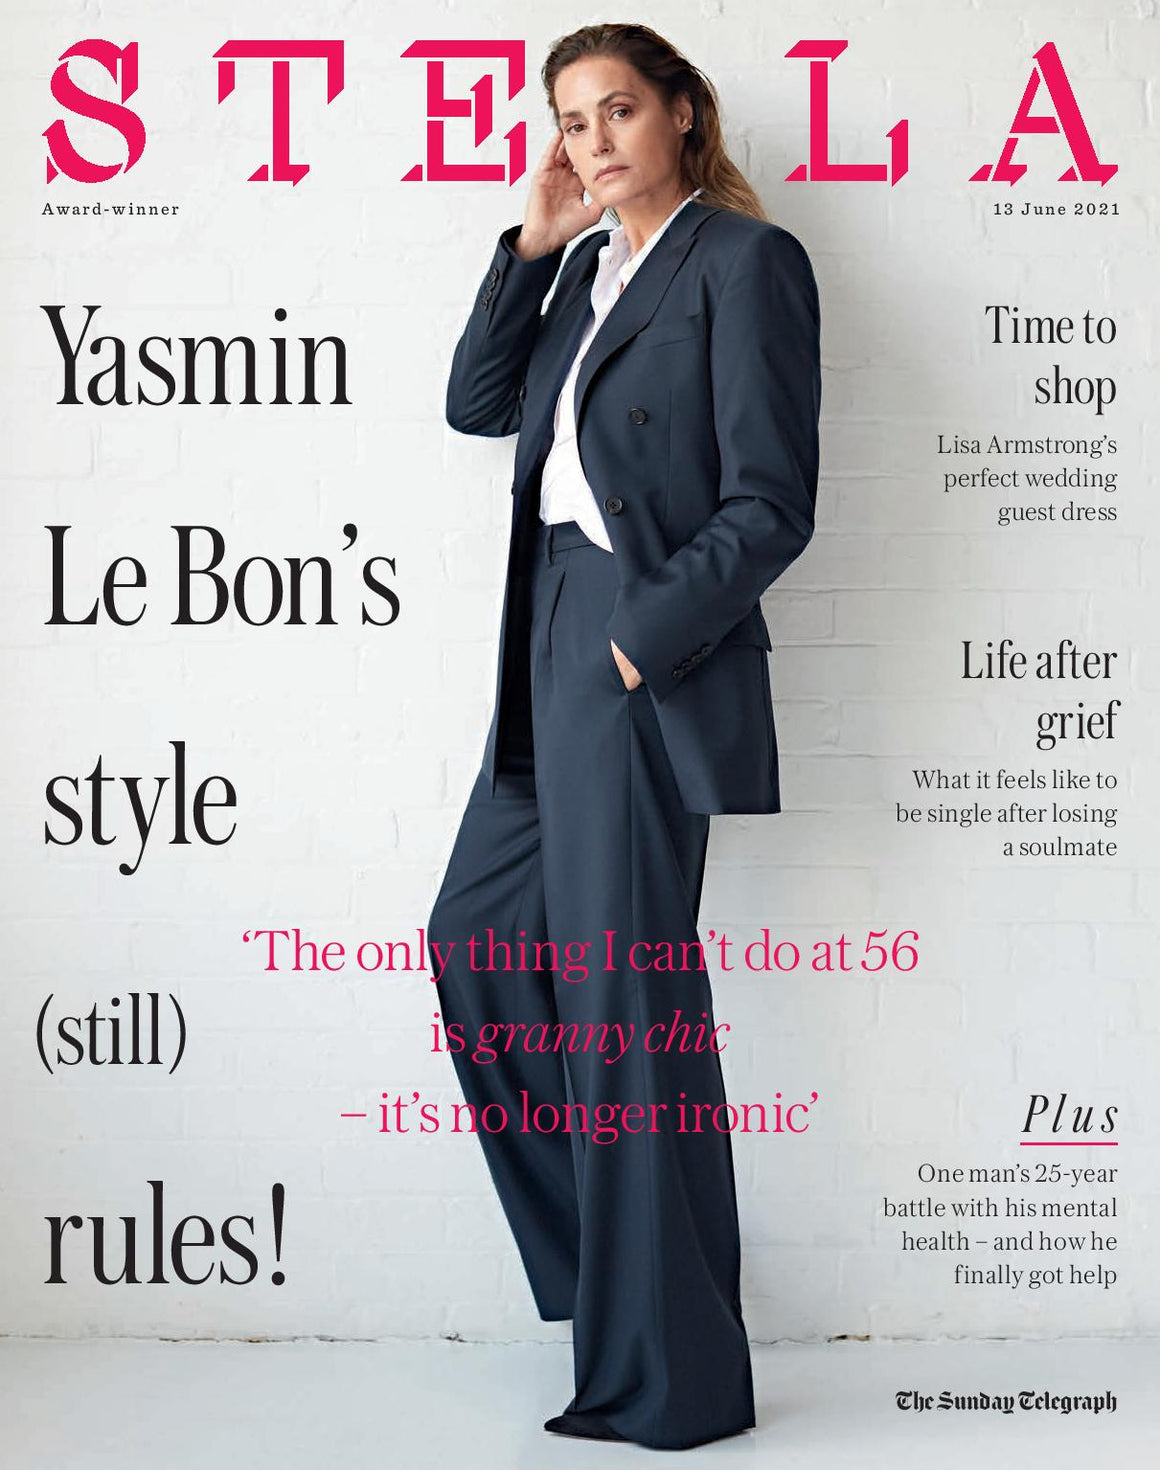 Stella magazine June 2021: Yasmin Le Bon (Simon) cover & interview Duran Duran